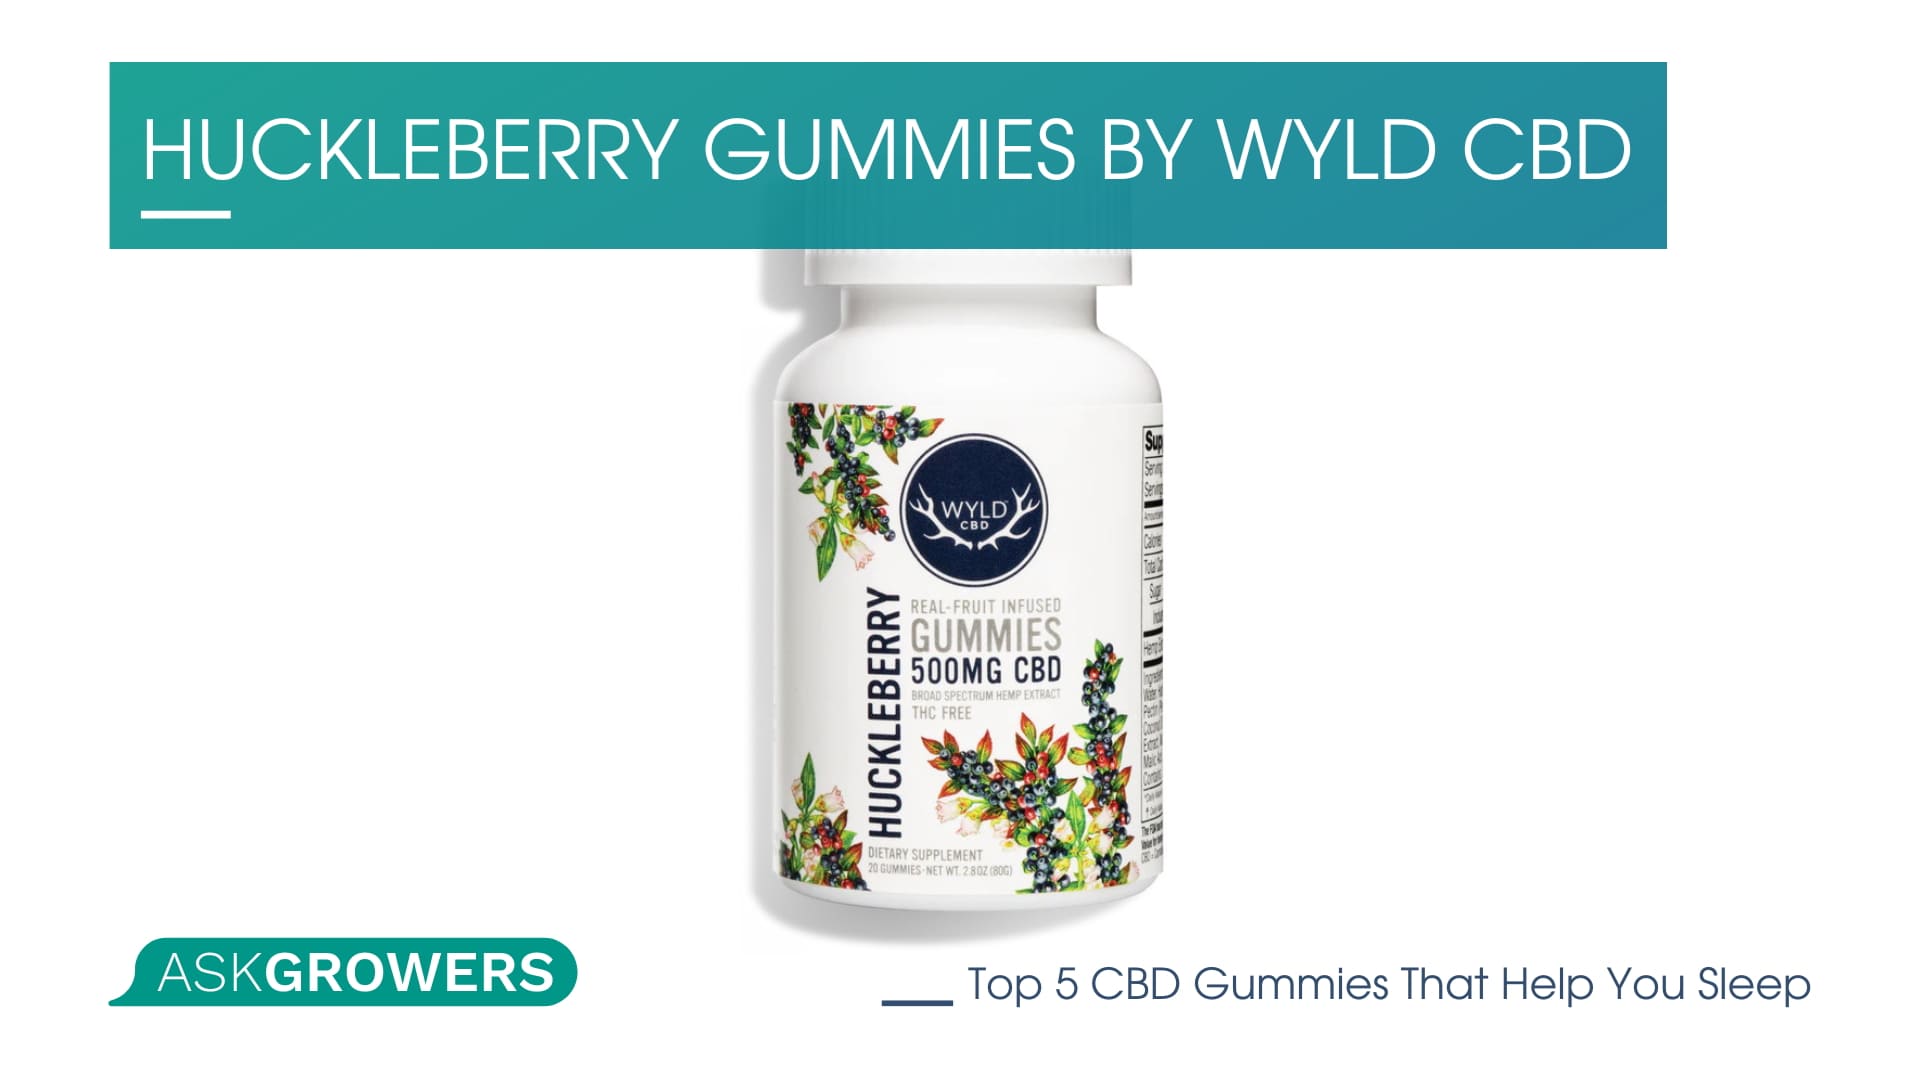 Huckleberry Gummies by WYLD CBD